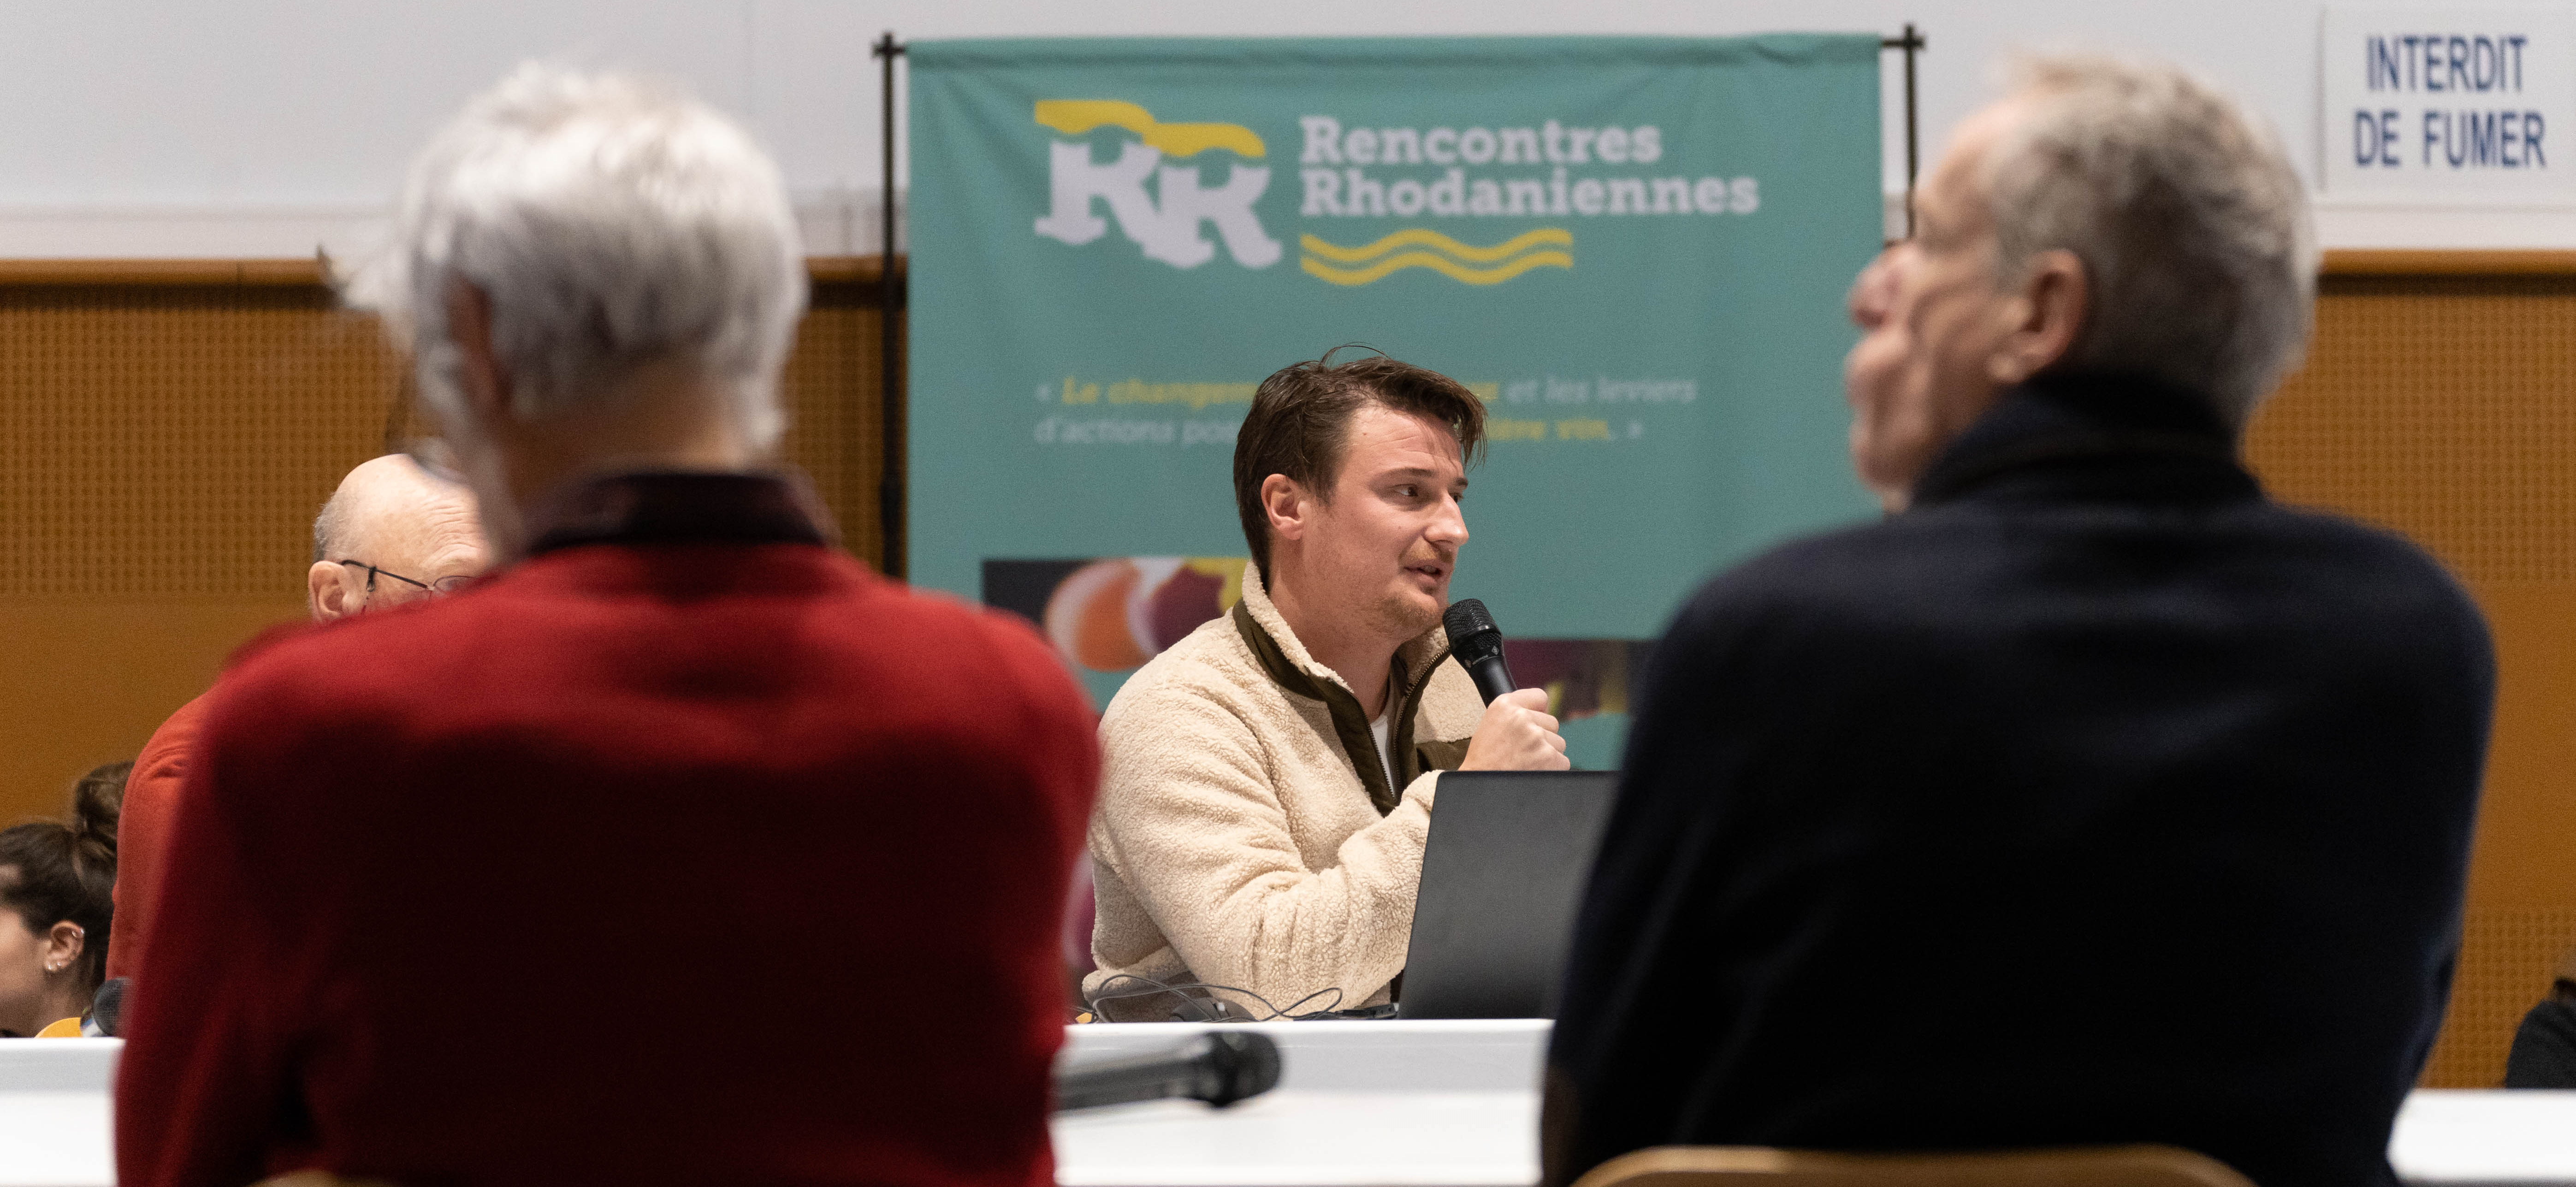 Rencontres Rhodaniennes - Conférence de Renan Le Roux (INRAE)